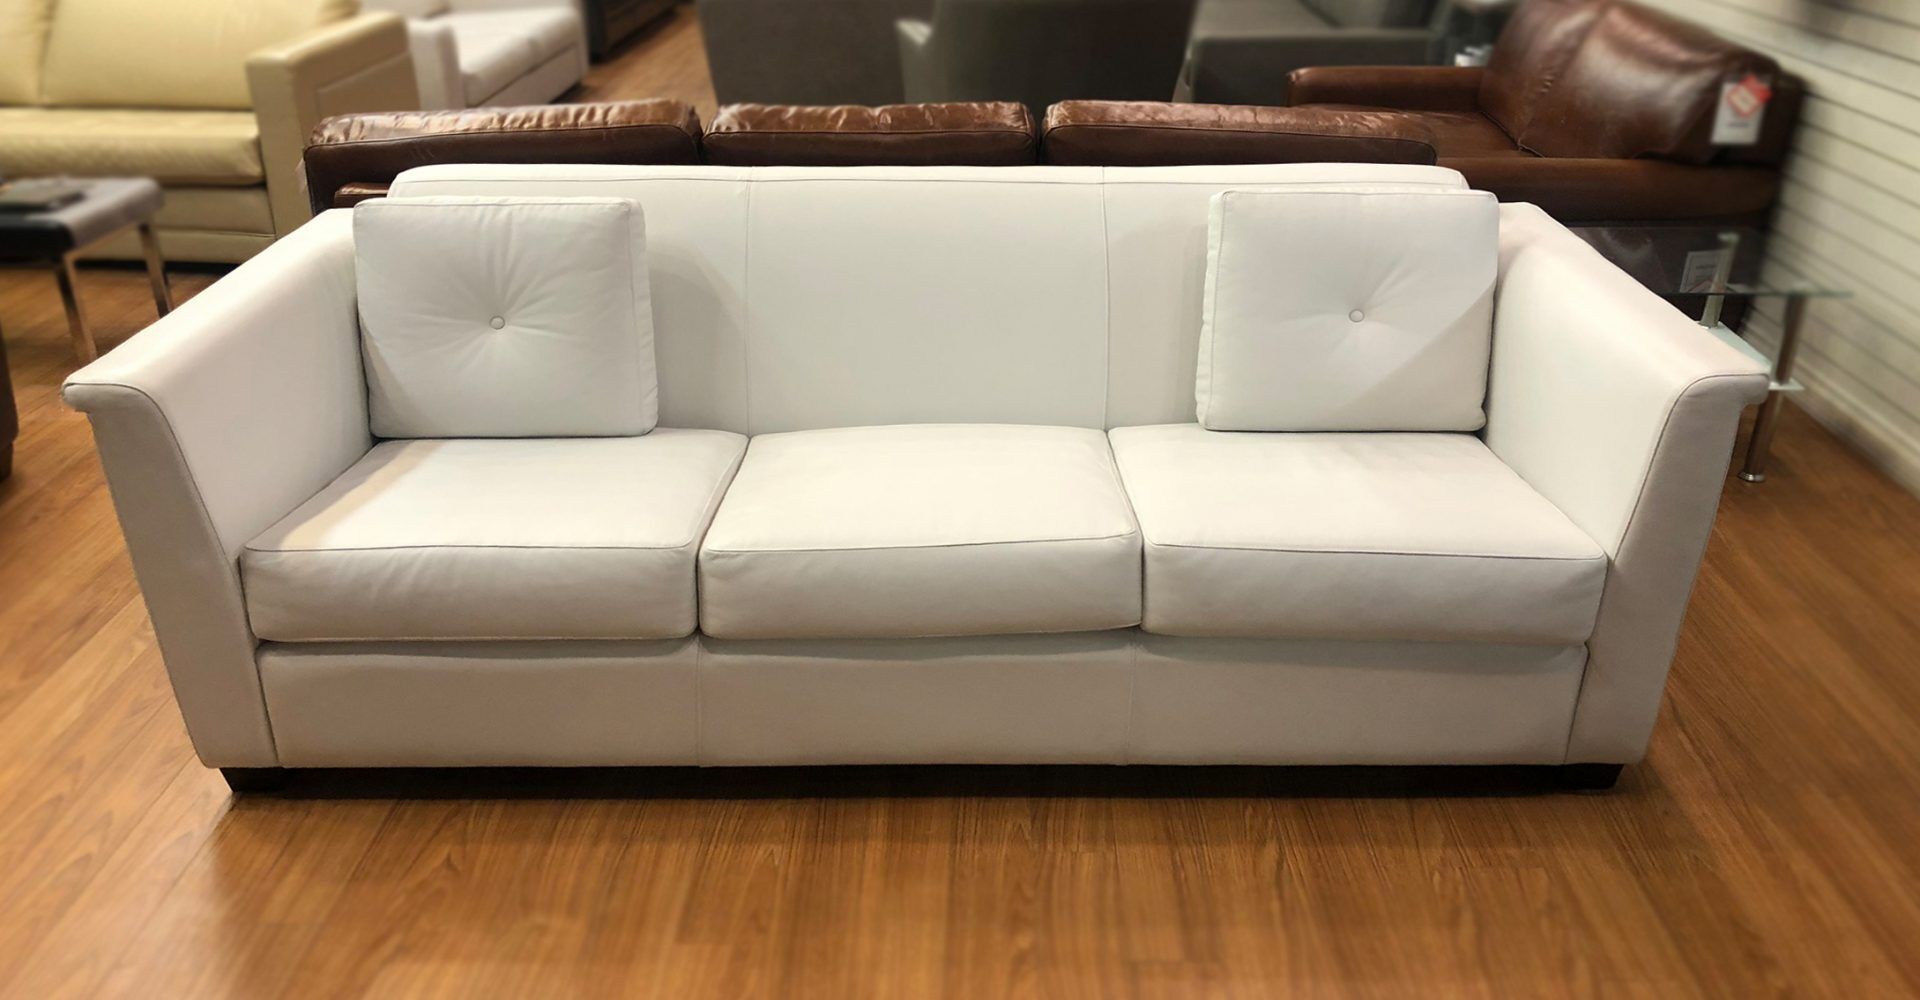 kimberly leather craft sofa